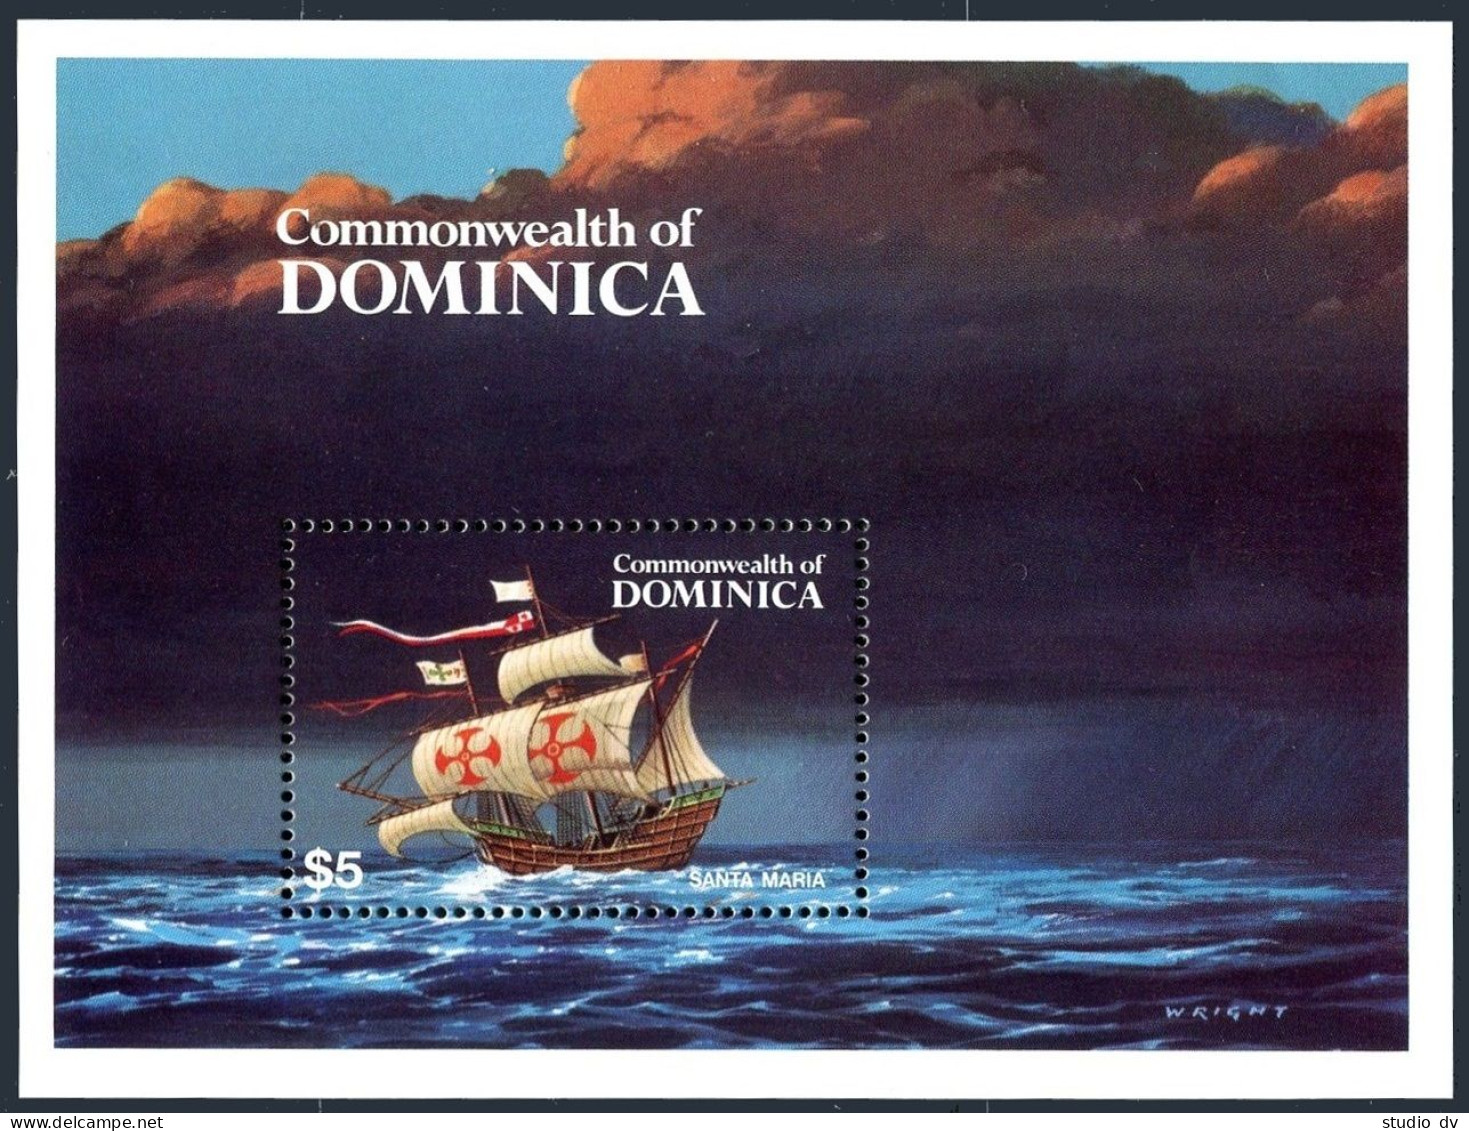 Dominica 842-845,846,MNH. Ships 1984:Atlantic Star,Atlantic,Pirogue,Santa Maria. - Dominica (1978-...)